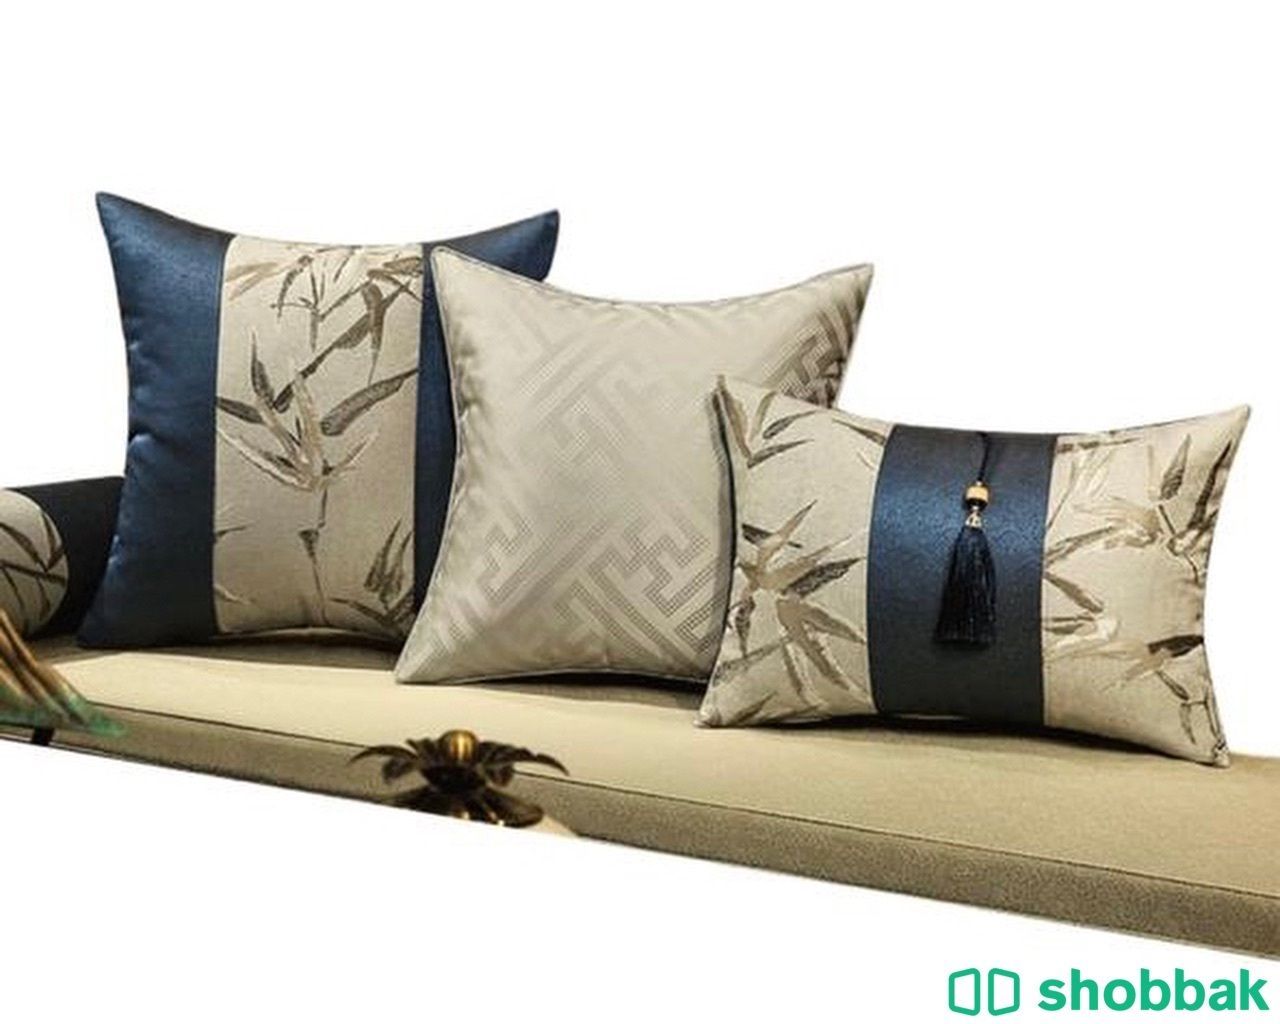 كوشنز - خداديات - cushions Shobbak Saudi Arabia